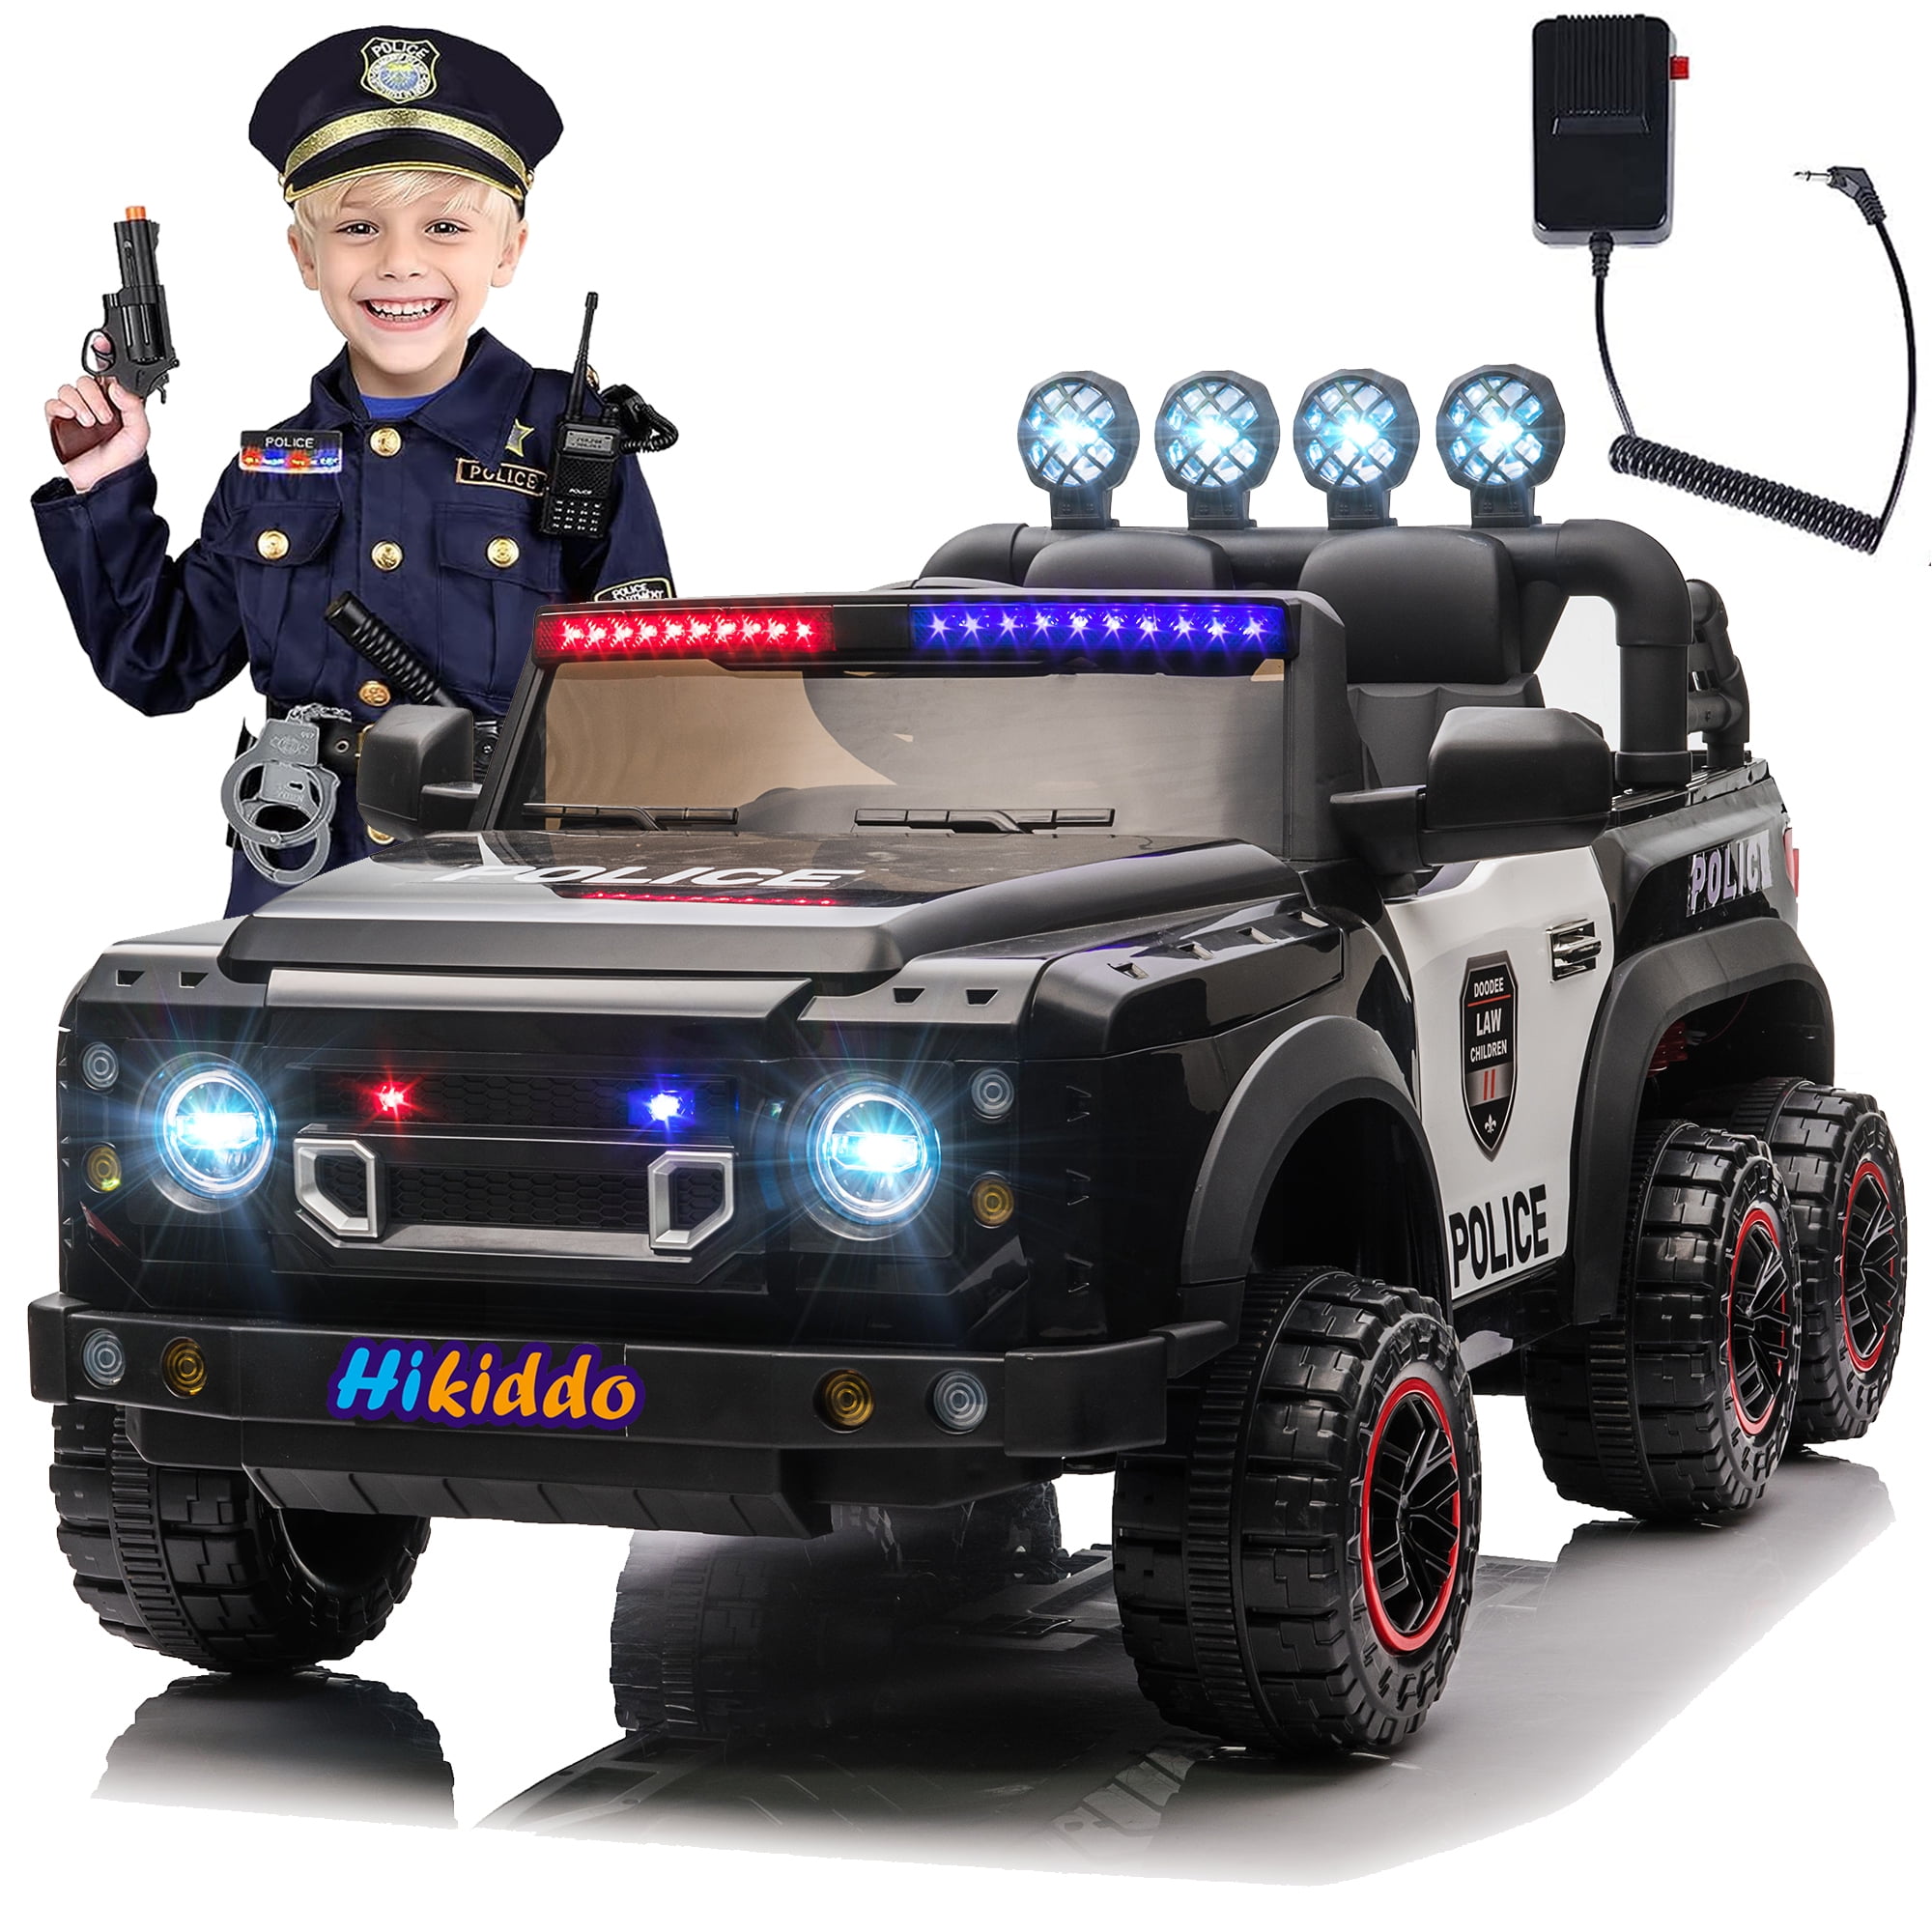 JOYLDIAS 6 Wheels 12V Kids Ride on Police Car Toy with Remote